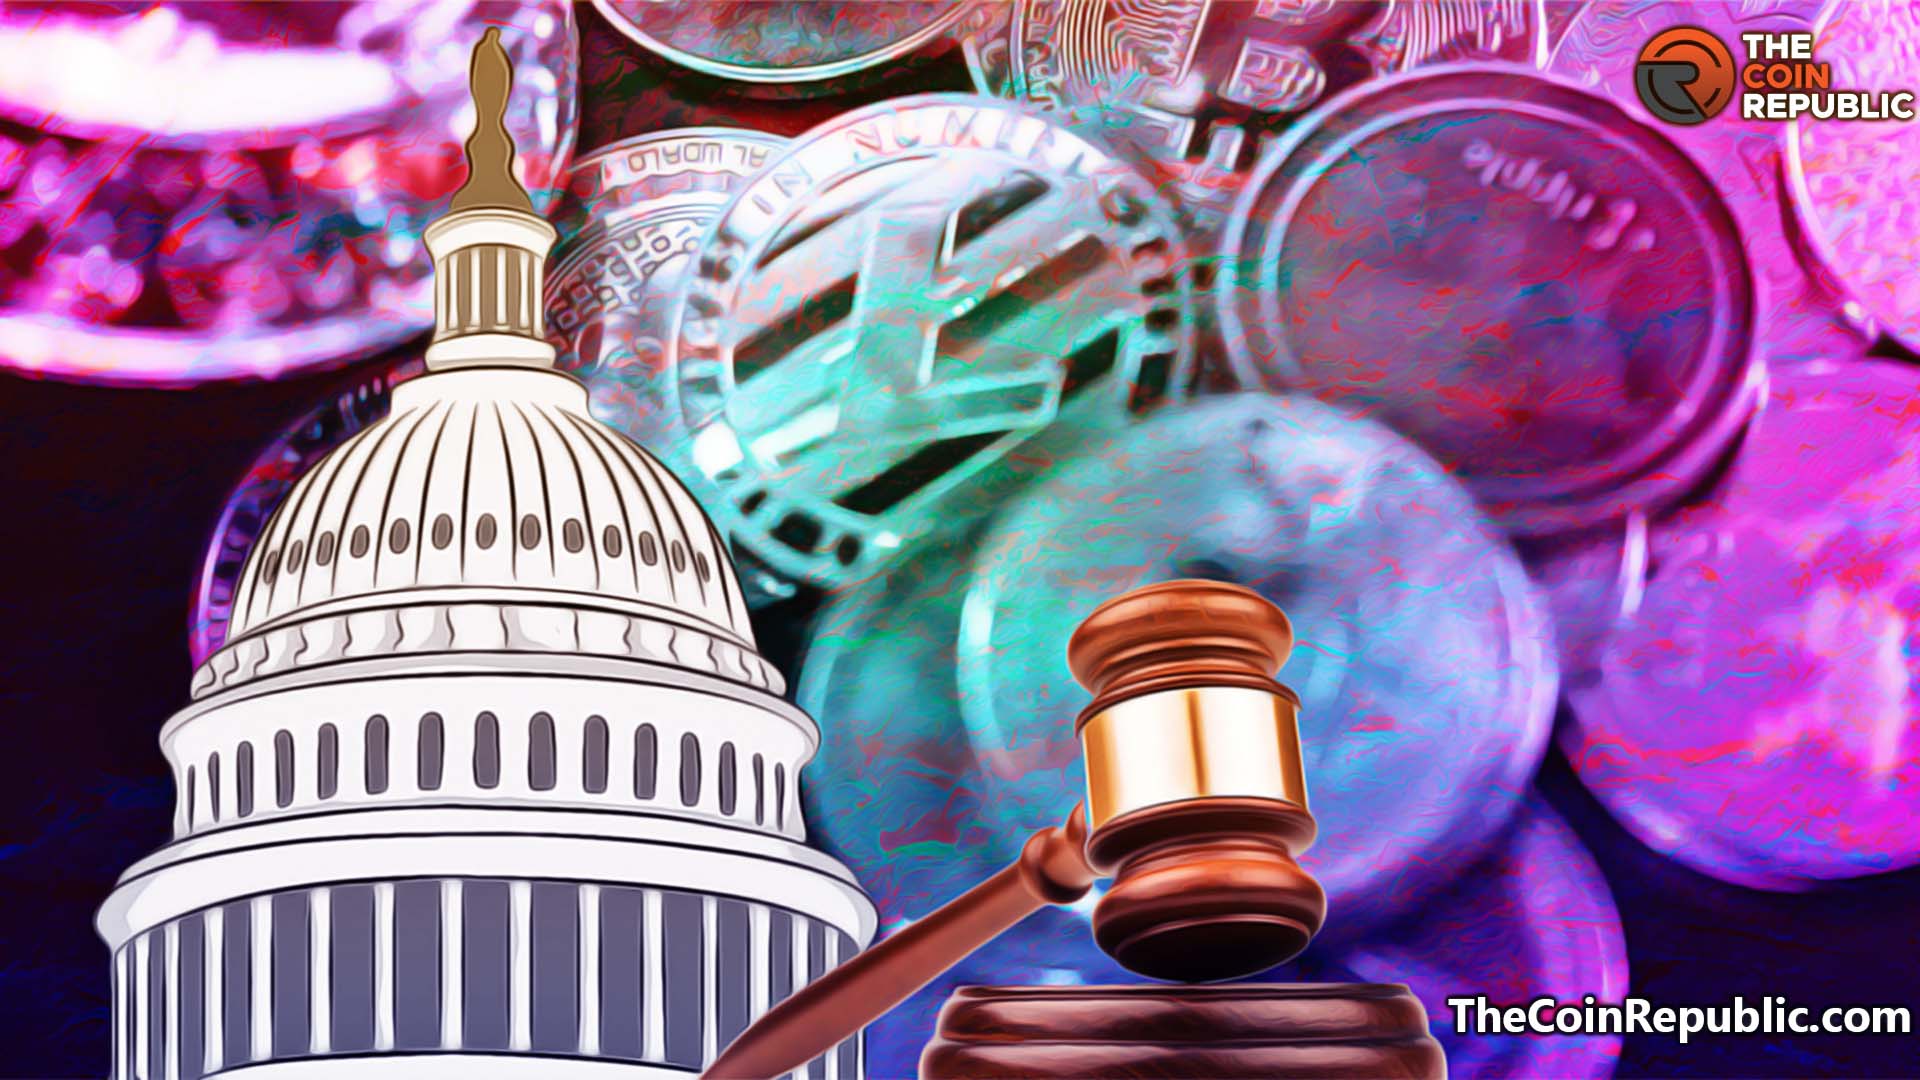 Blockchain Association echoes that Congress will determine the regulatory framework, not the SEC